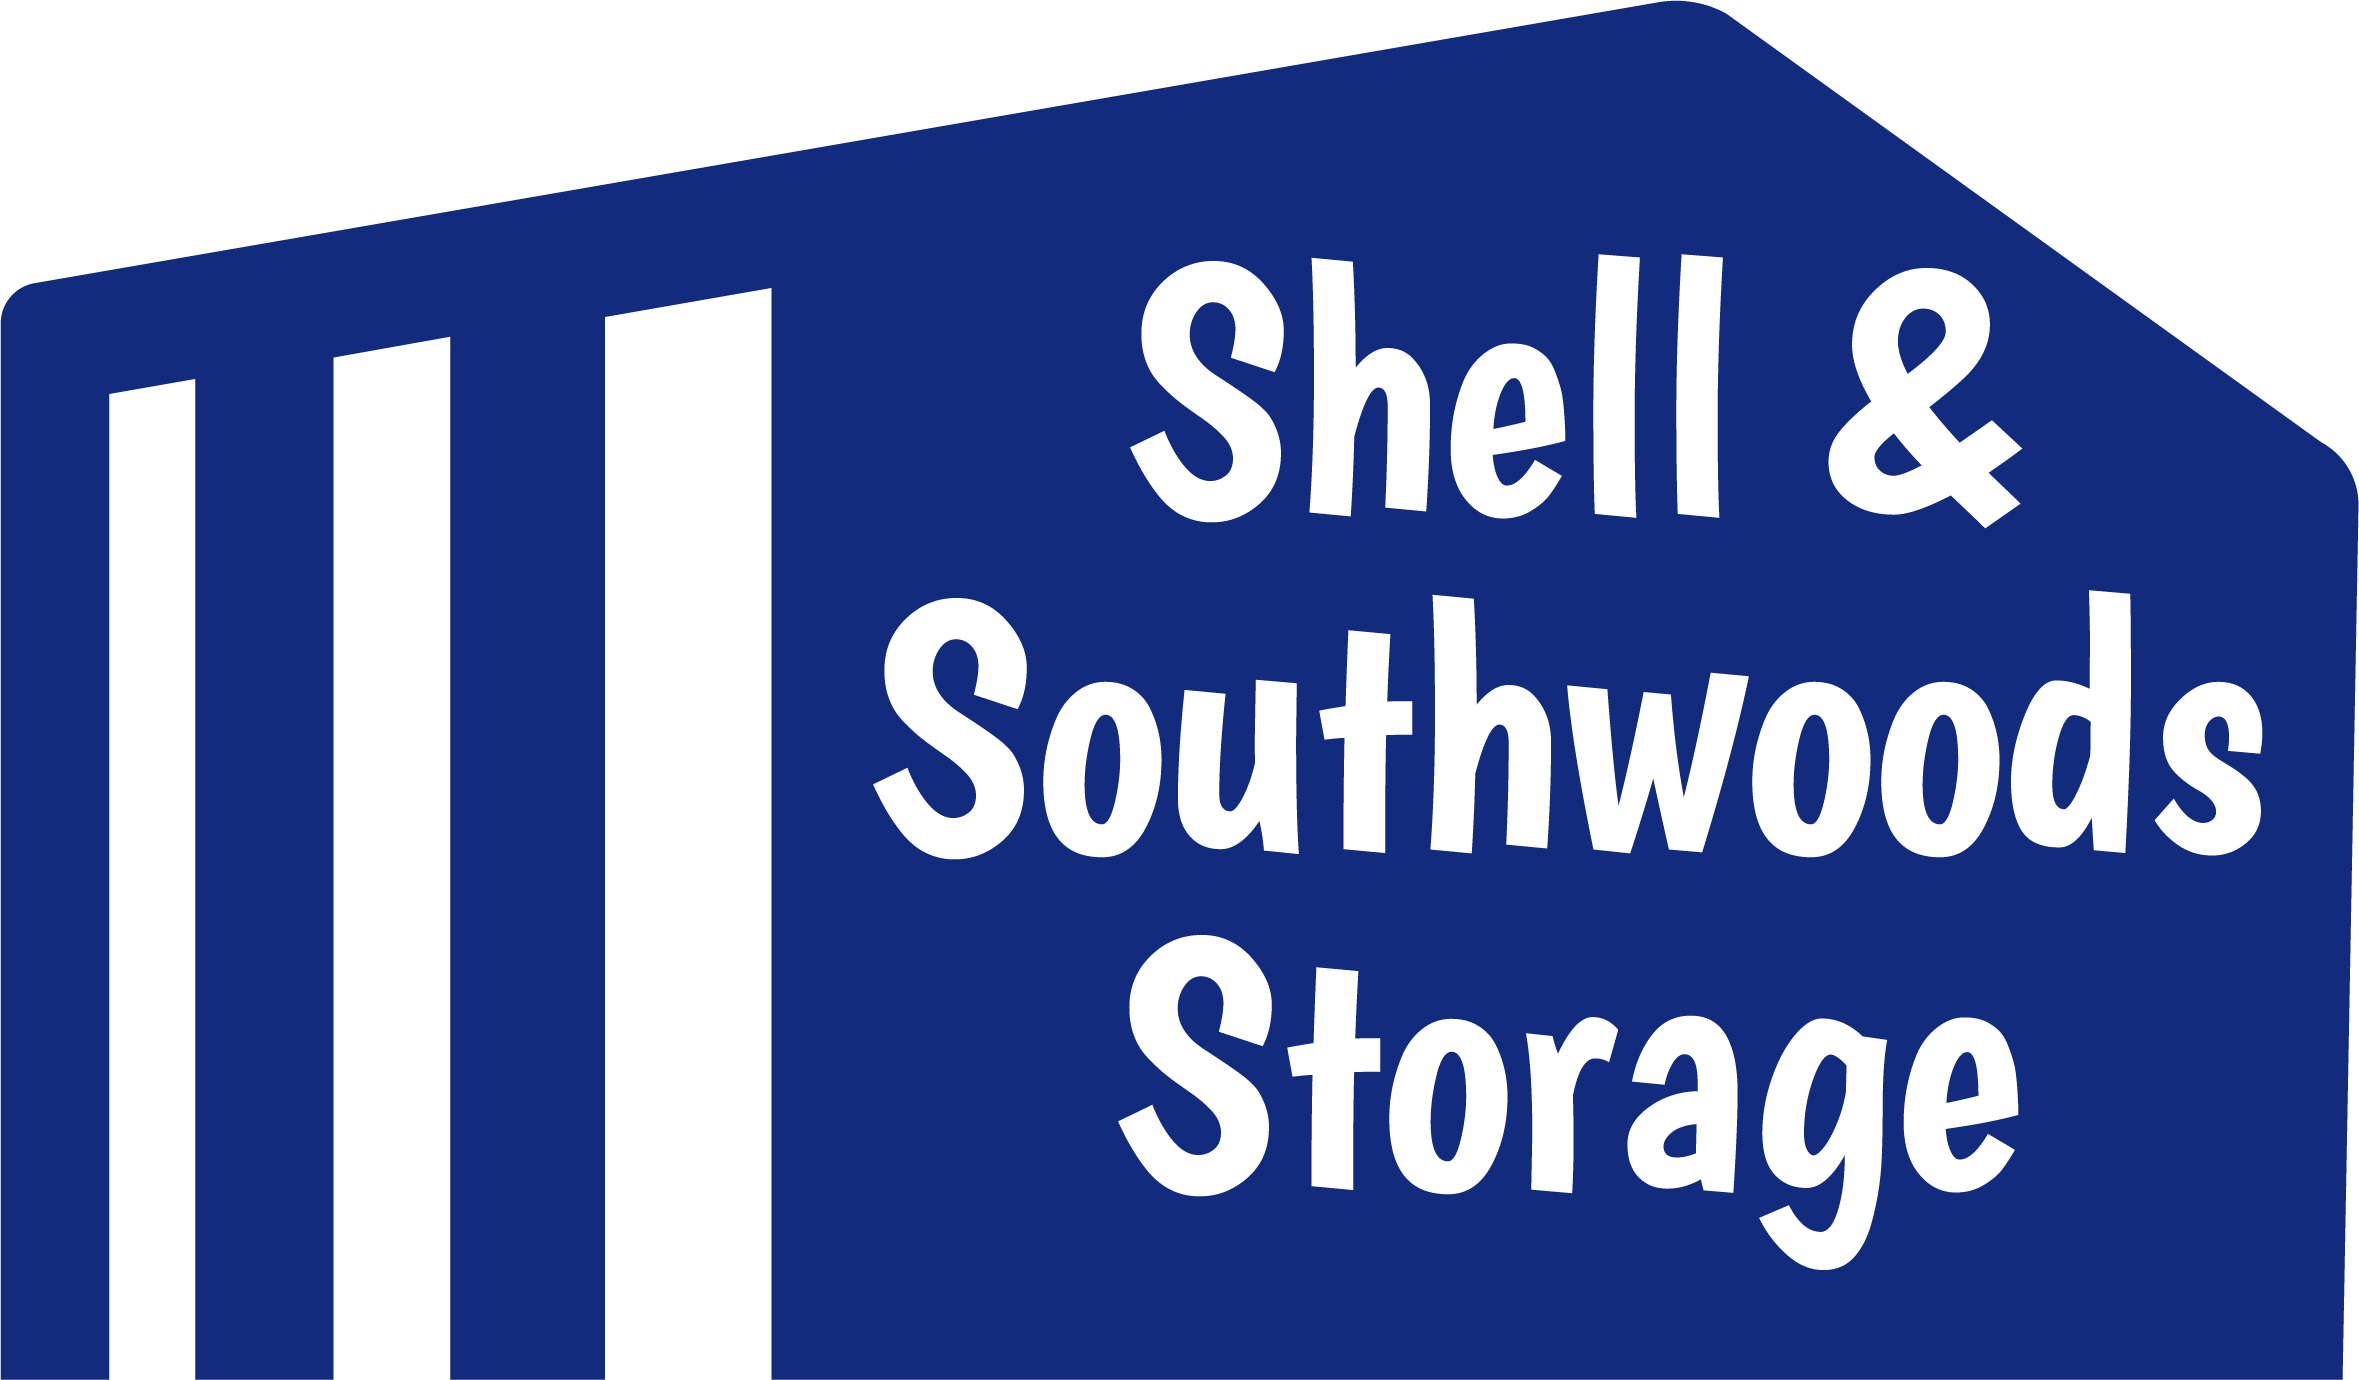 Shell & Southwoods Storage